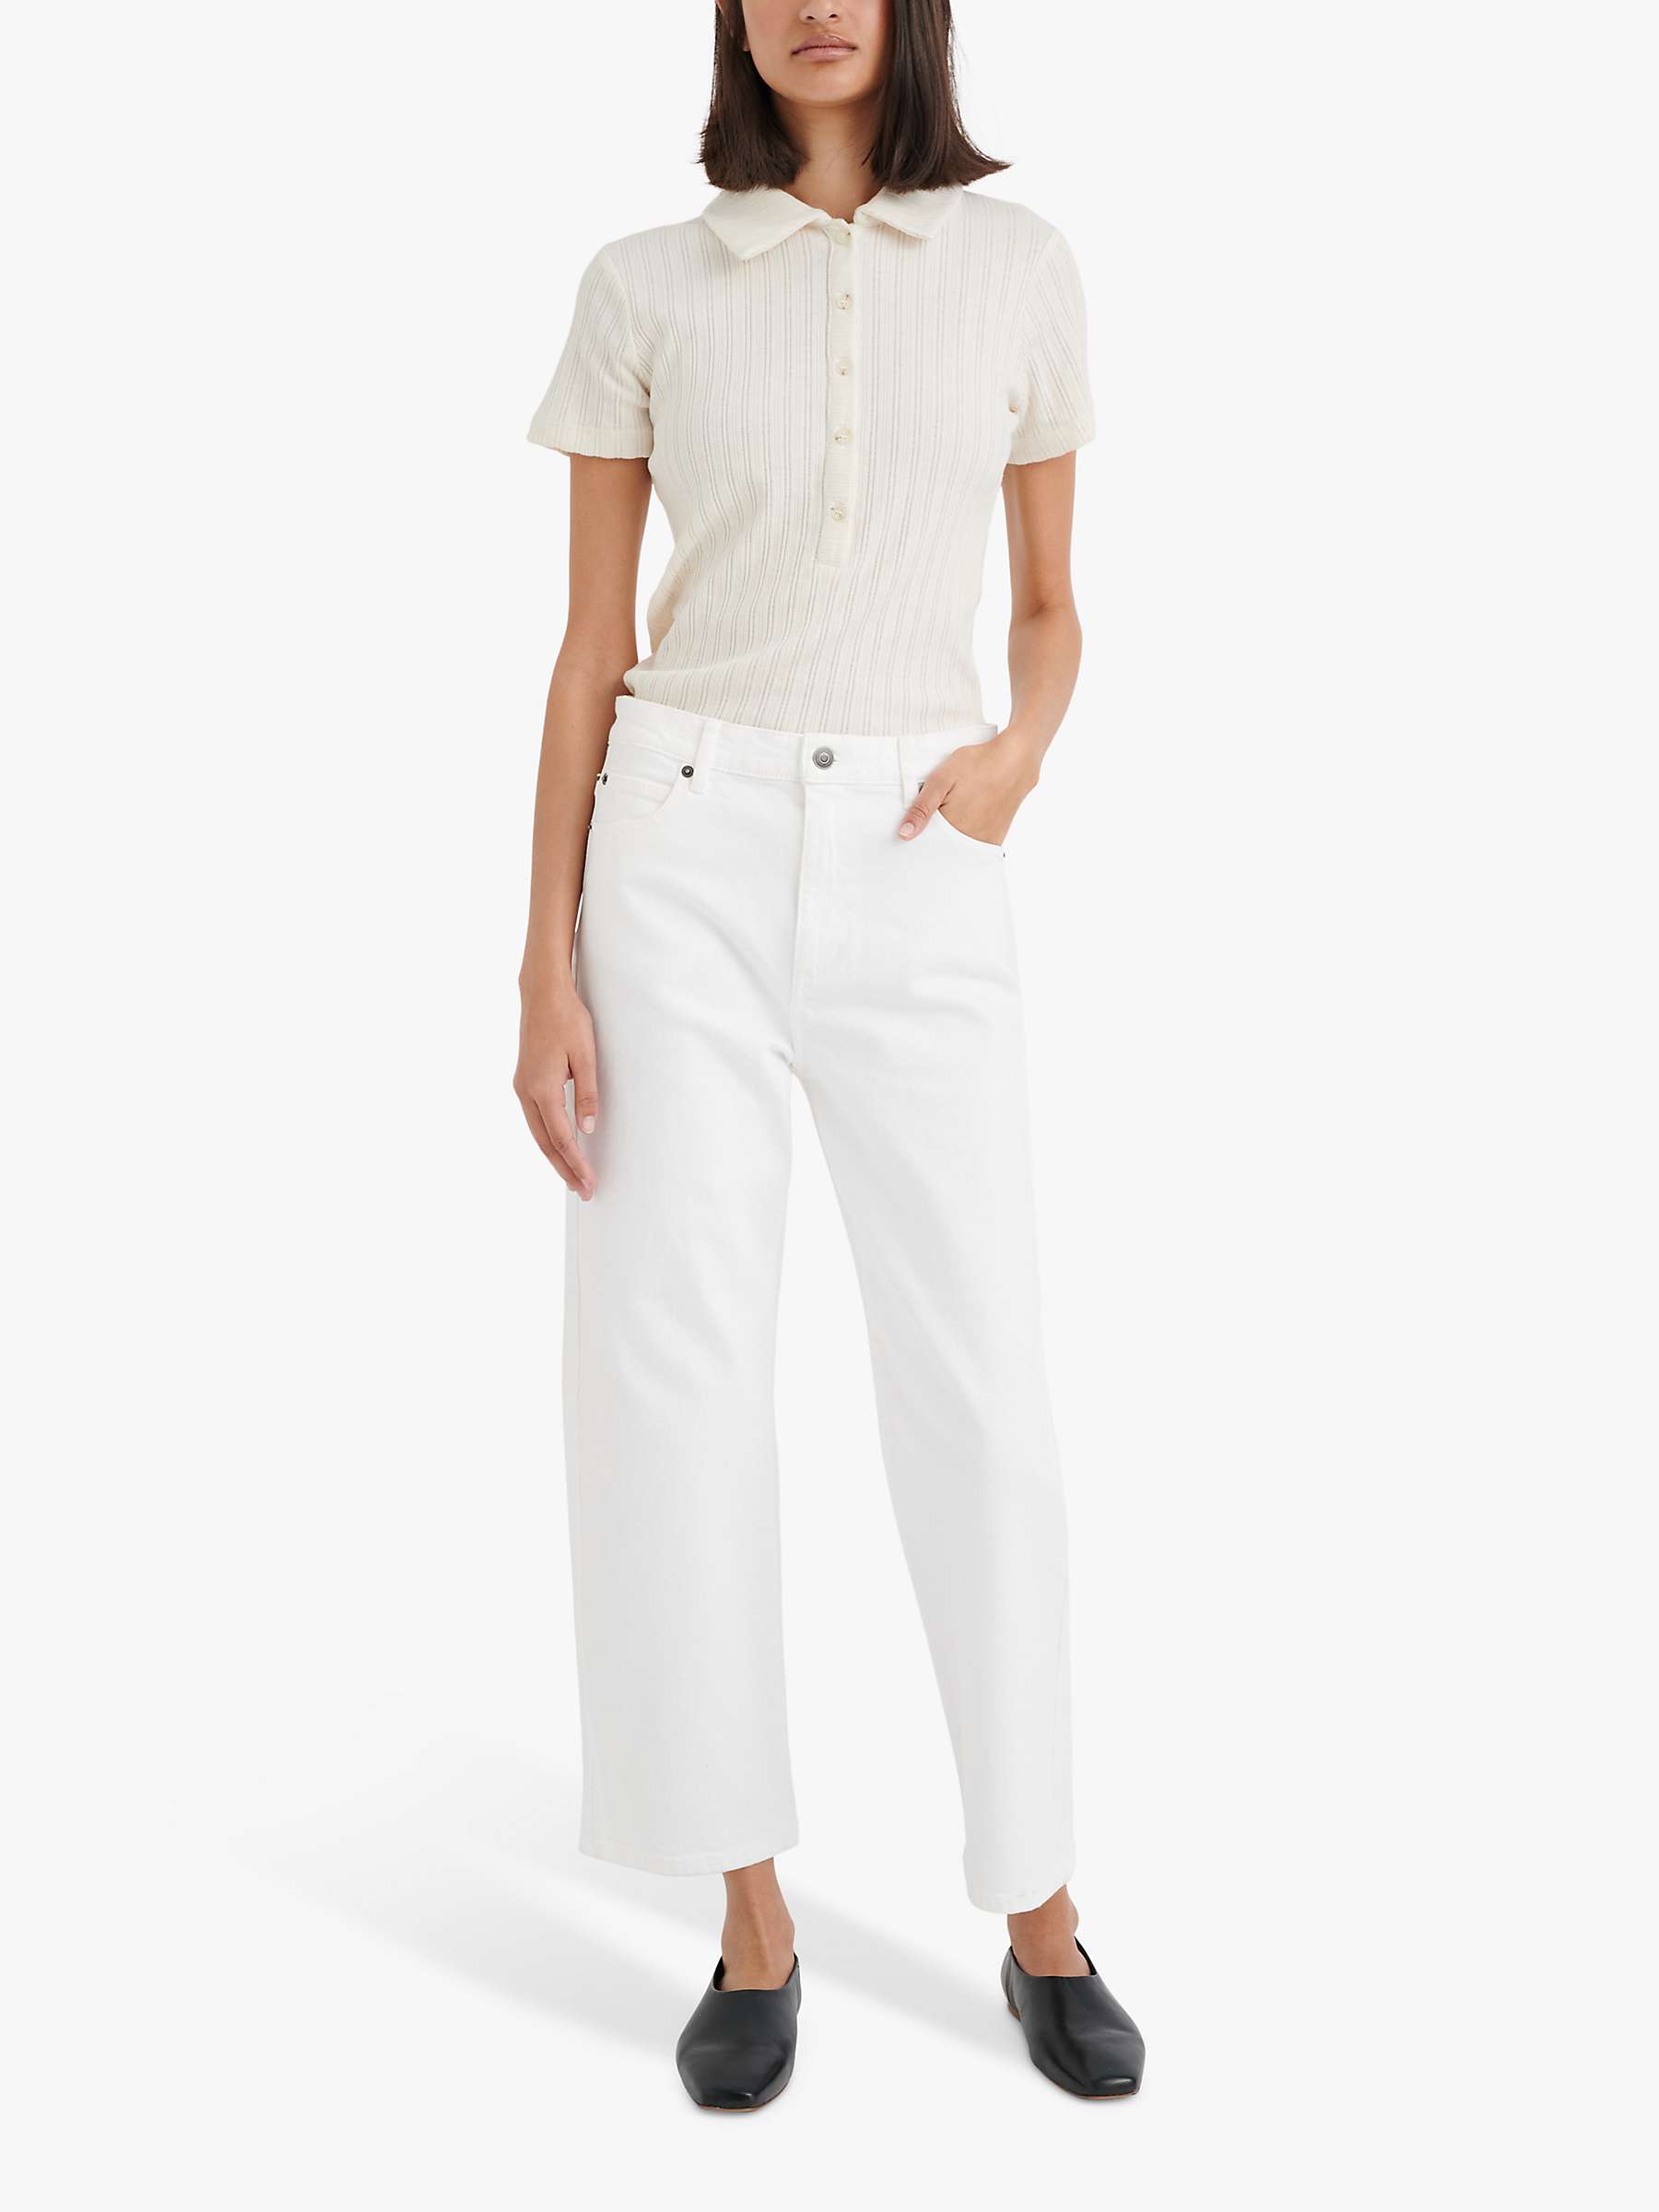 Buy InWear Kiko Stripe Linen Blend Shirt, Black/White Online at johnlewis.com